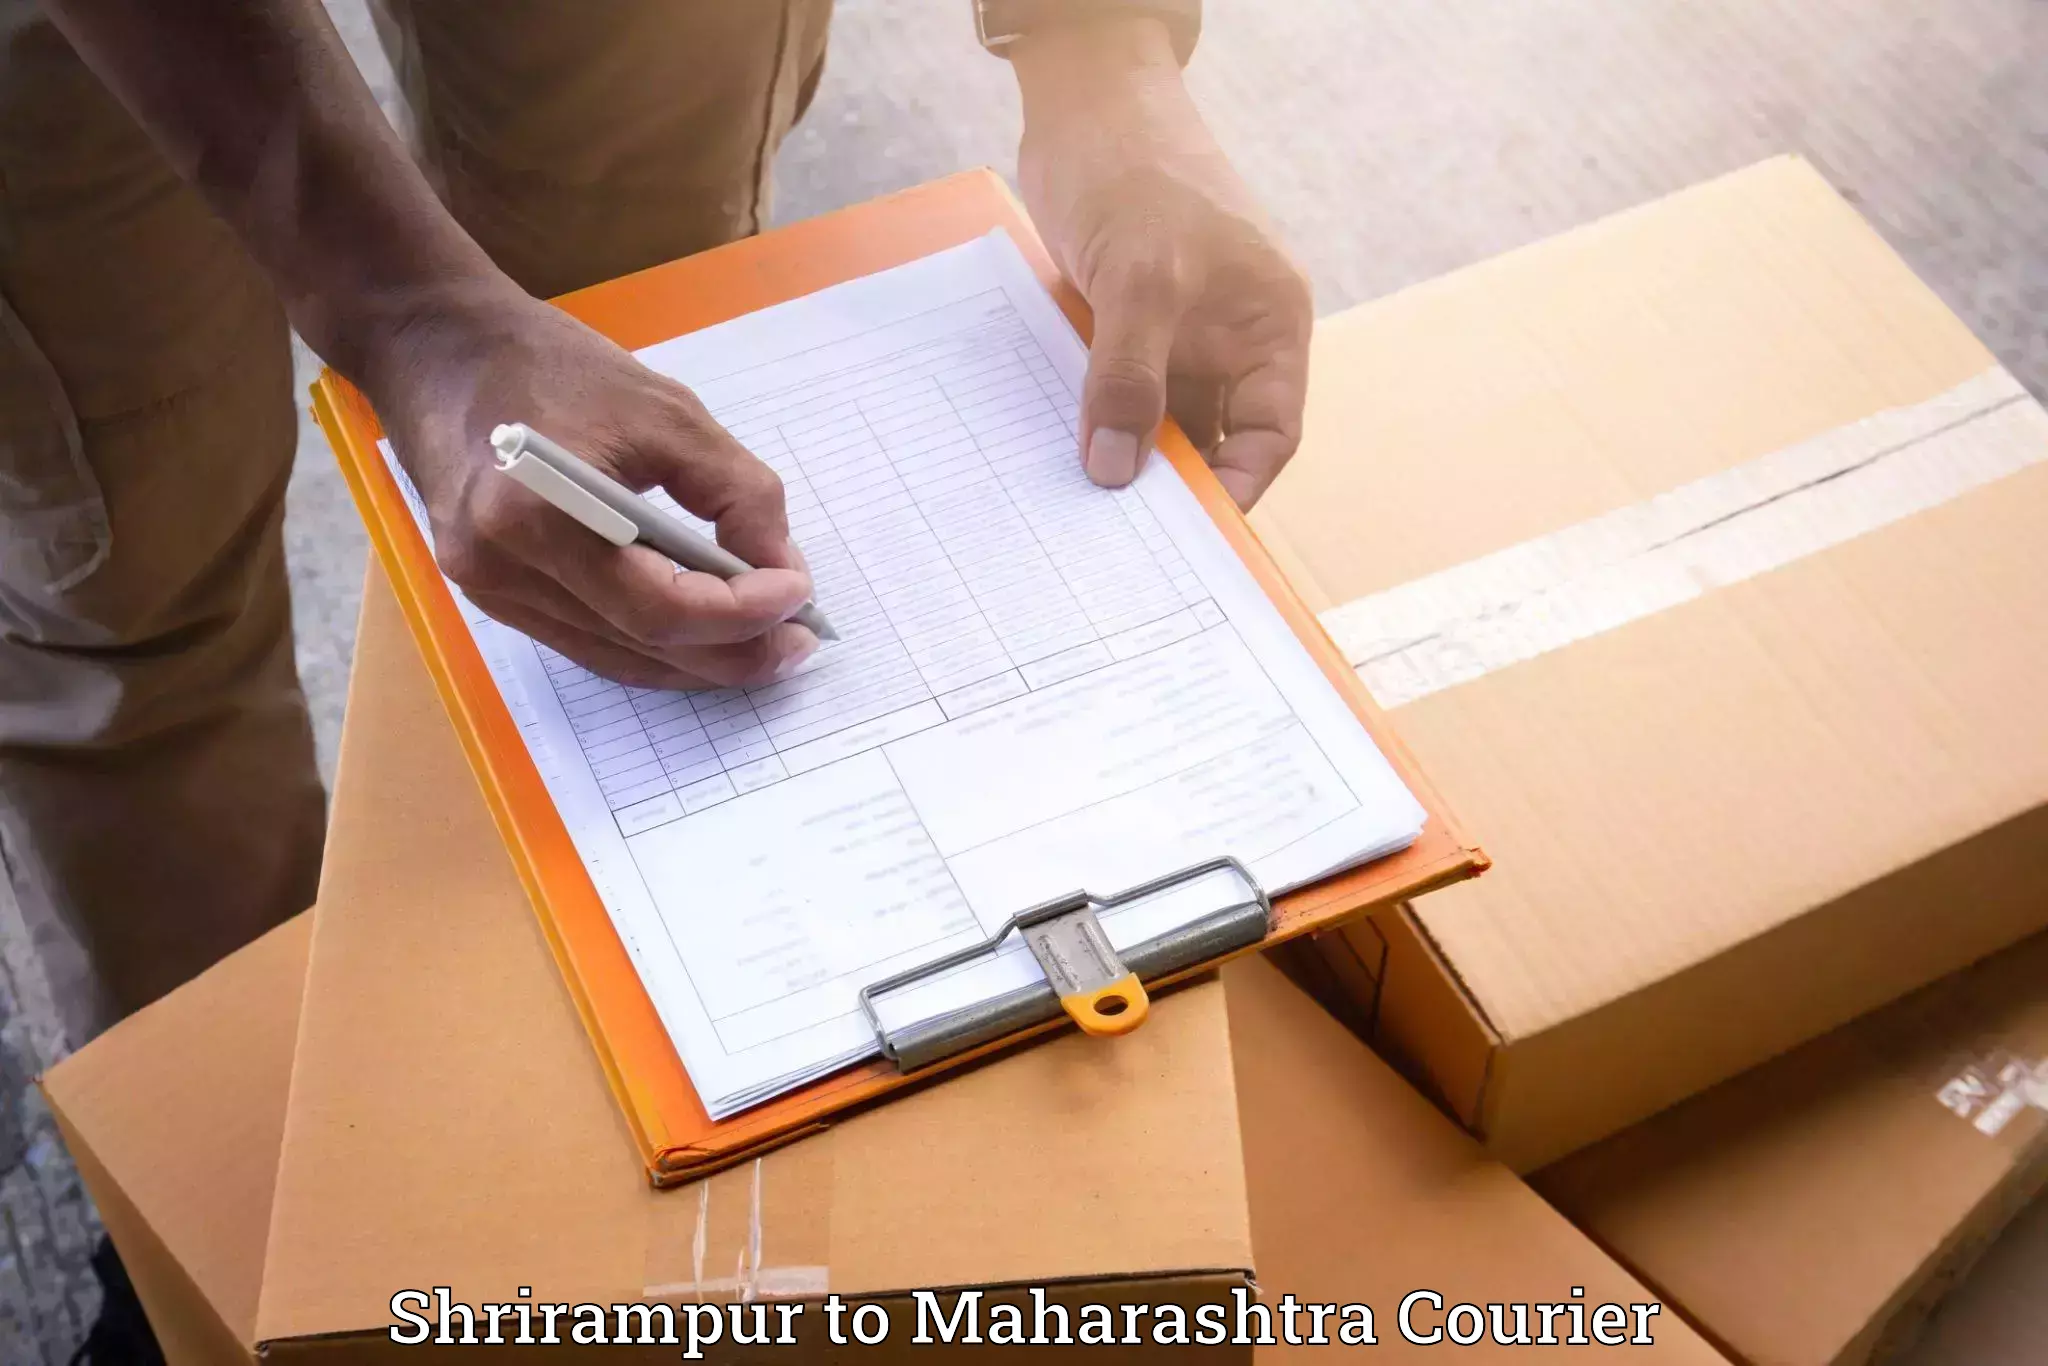 Furniture delivery service Shrirampur to Maharashtra